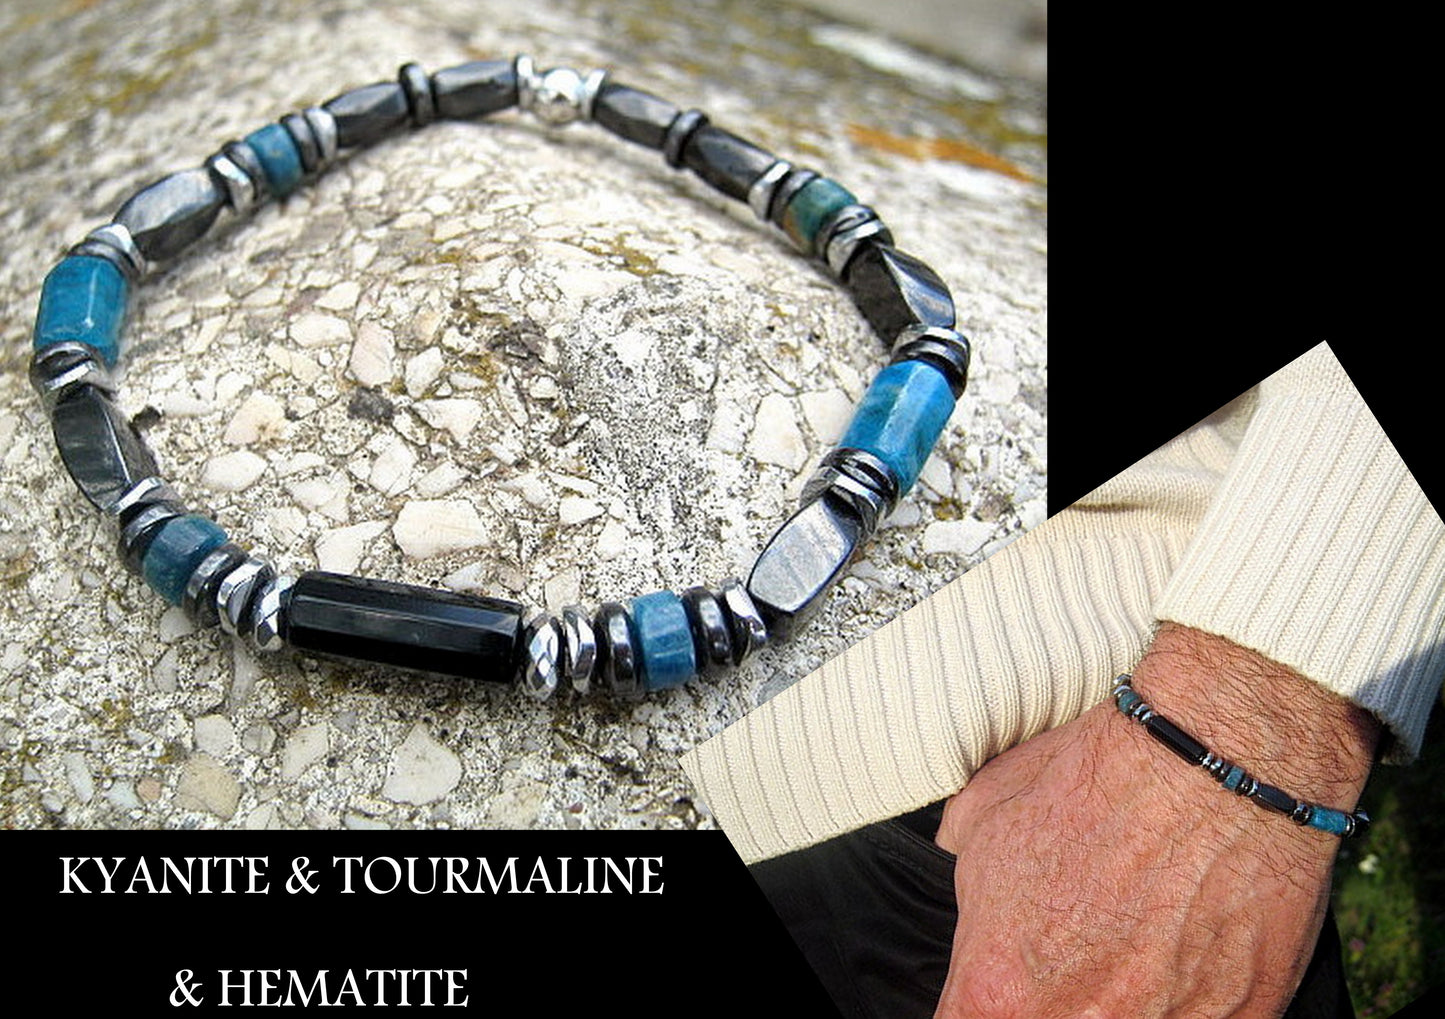 CAMELYS MAGIC 4 MEN - Men Bracelet Blue KYANITE LAVA Tourmaline Apatite, 925 St. Silver, Protection Healing stone, handmade bracelet men gift